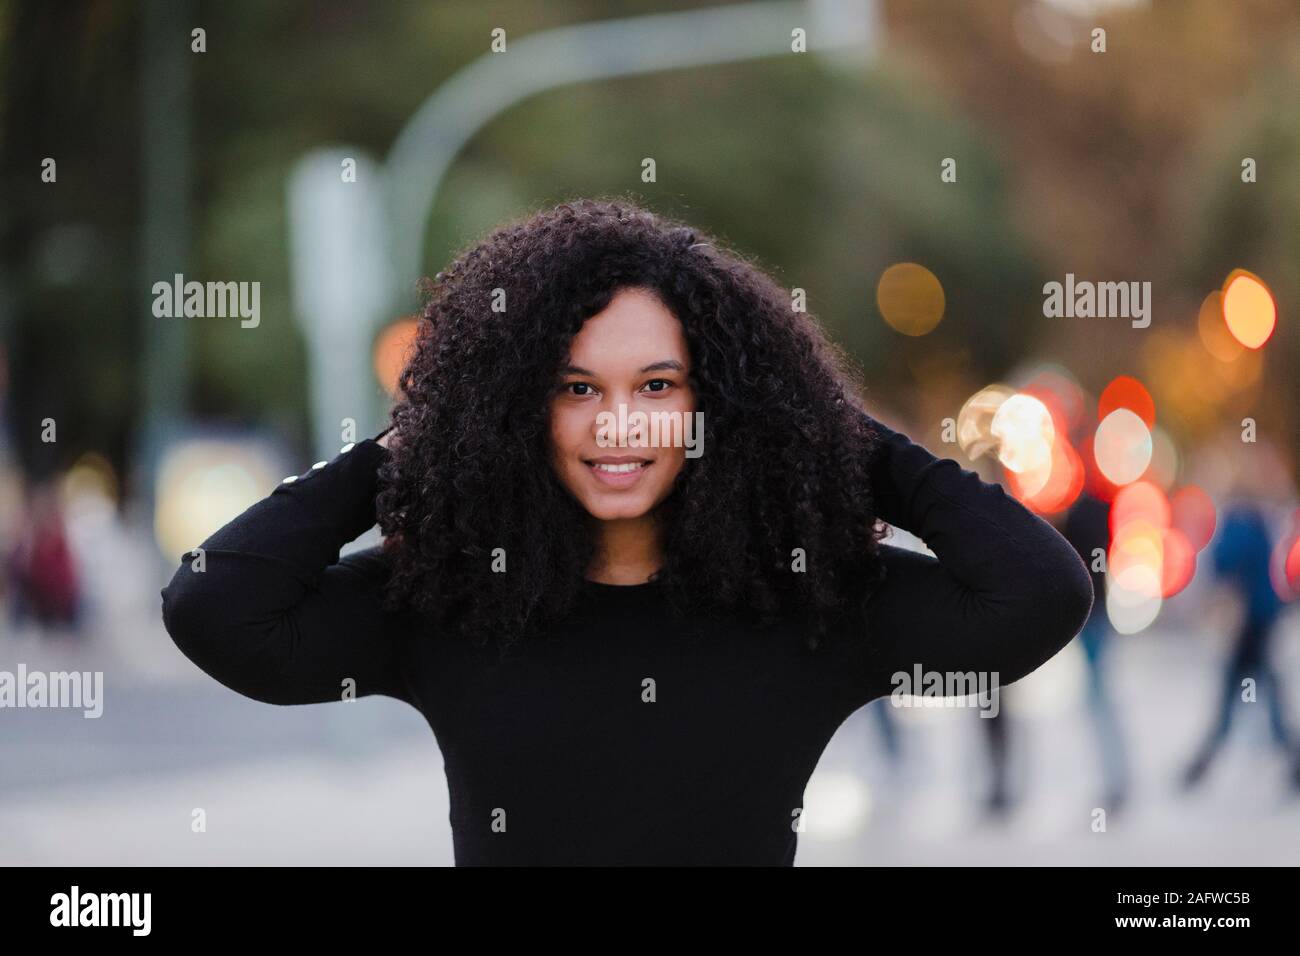 Portrait confident young woman on urban sidewalk Stock Photo